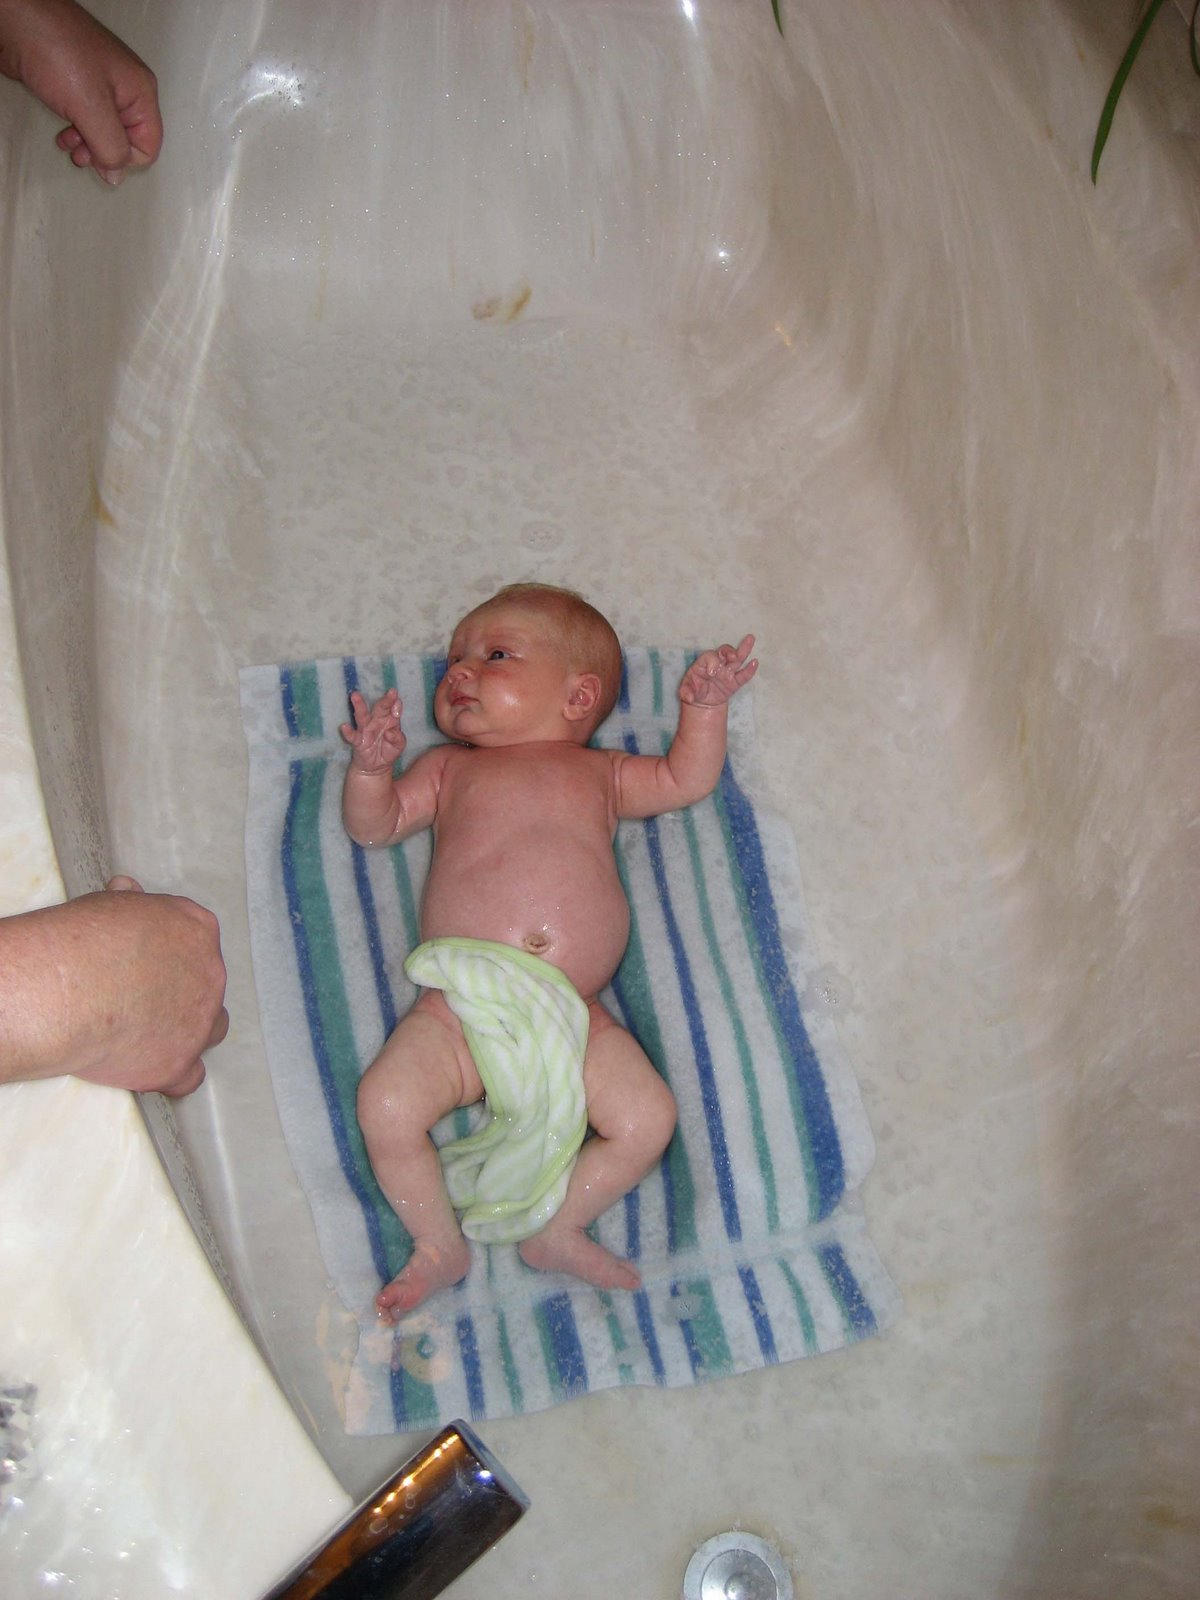 [011807-little+baby+big+tub-comp.jpg]